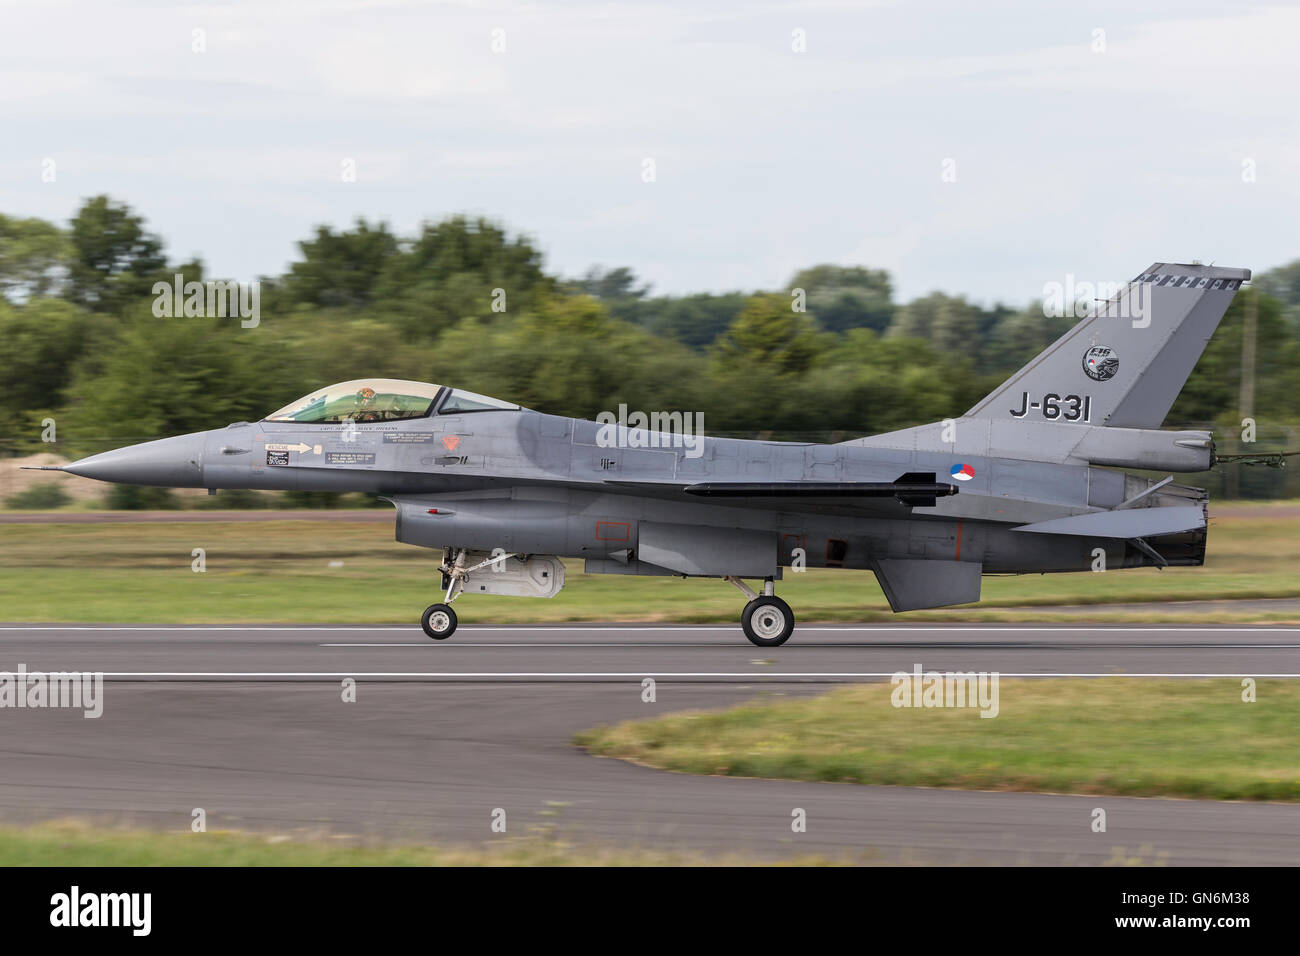 Royal Netherlands Air Force (Koninklijke Luchtmacht) General Dynamics F-16AM degli aerei da caccia. Foto Stock